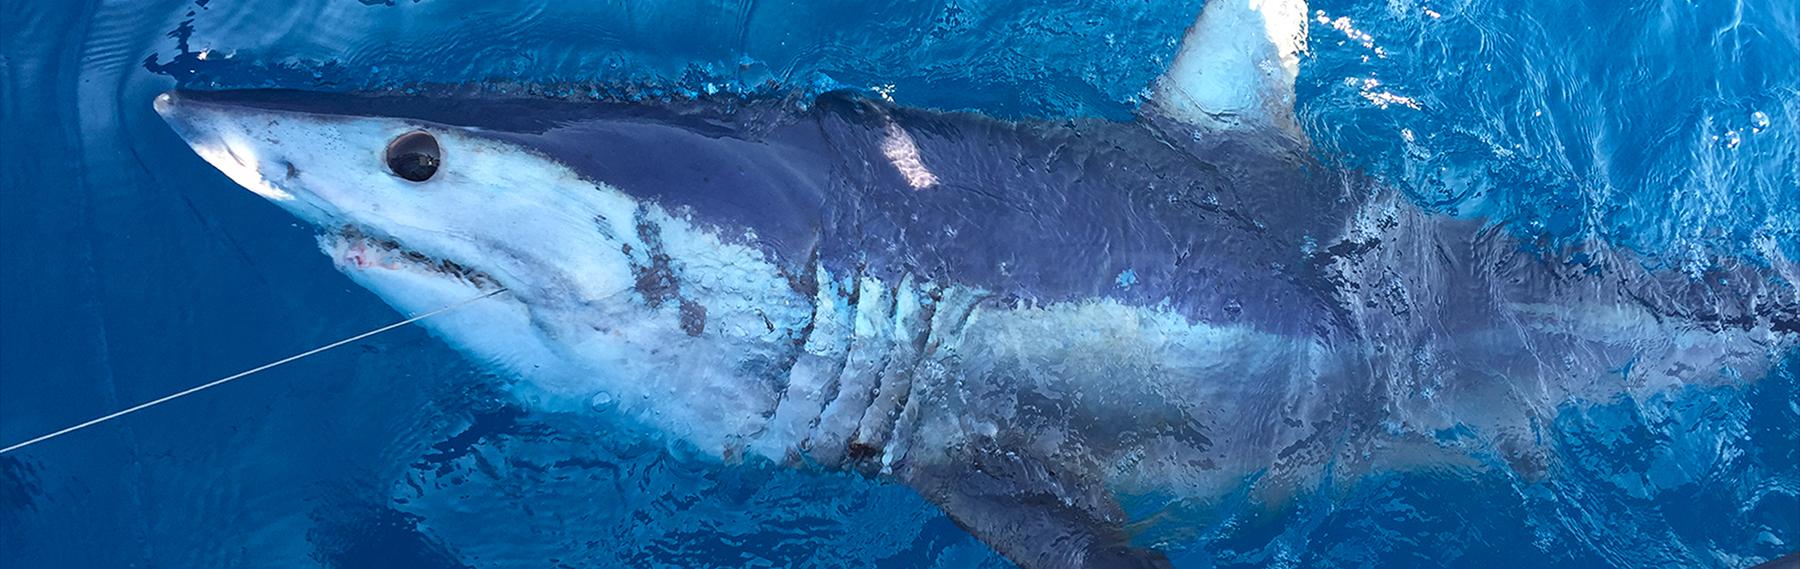 Año Nuevo Island White Shark Study/Pelagic Shark Research Foundation on  Vimeo